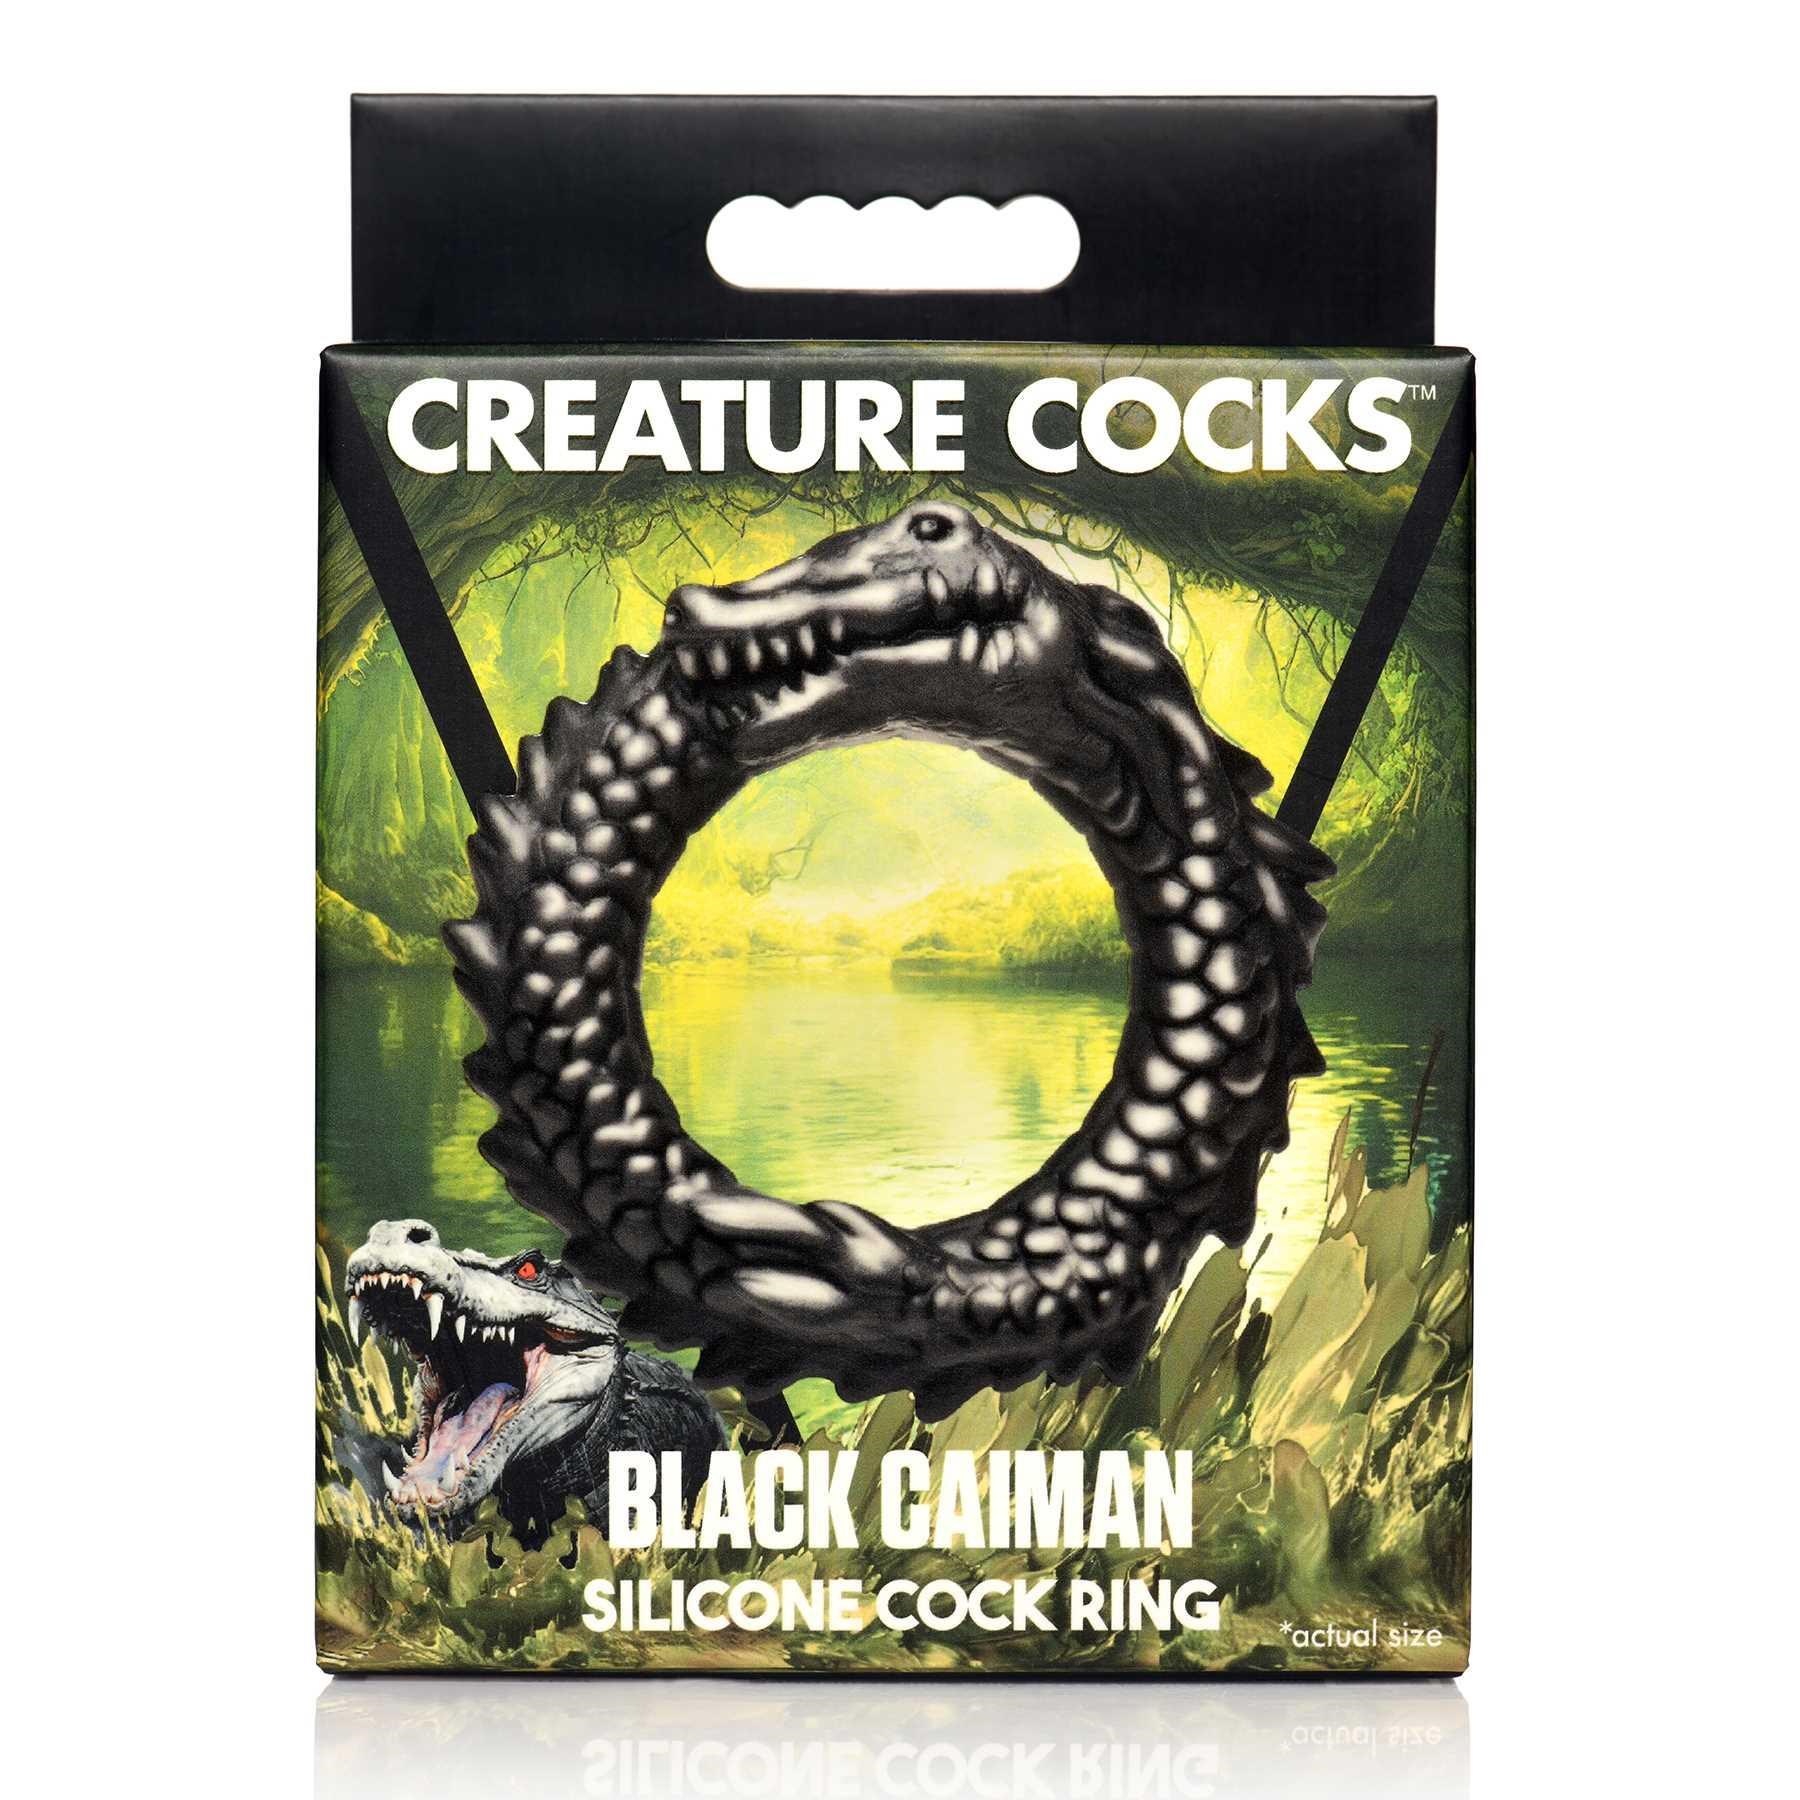 Creature Cocks Black Caiman Silicone Cock Ring box